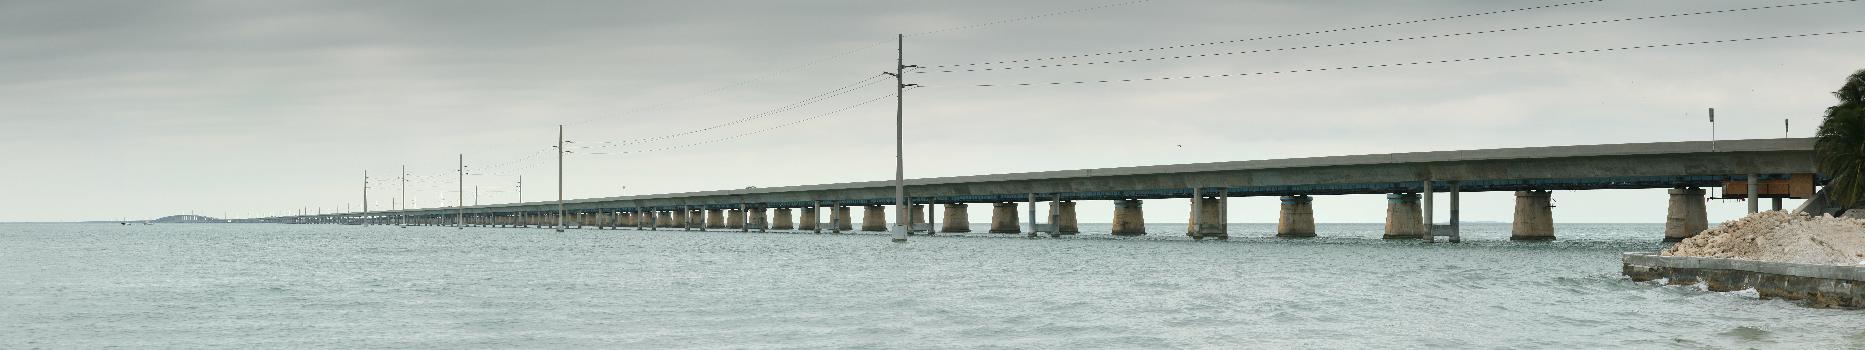 Panoramic image of the Seven Mile Bridge on the Florida Keys